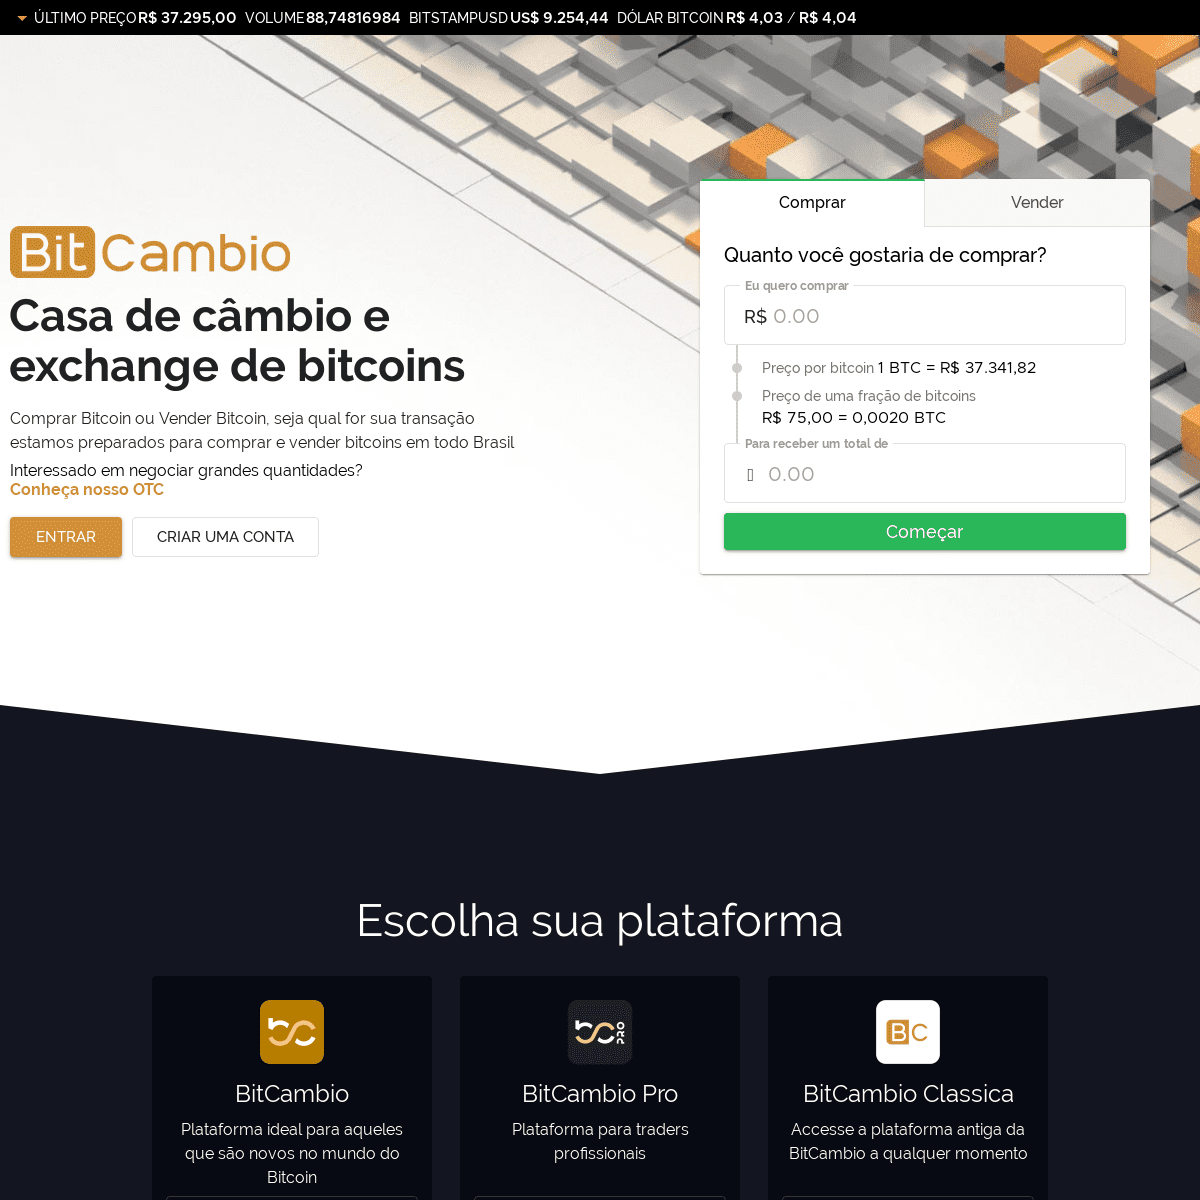 A complete backup of bitcambio.com.br